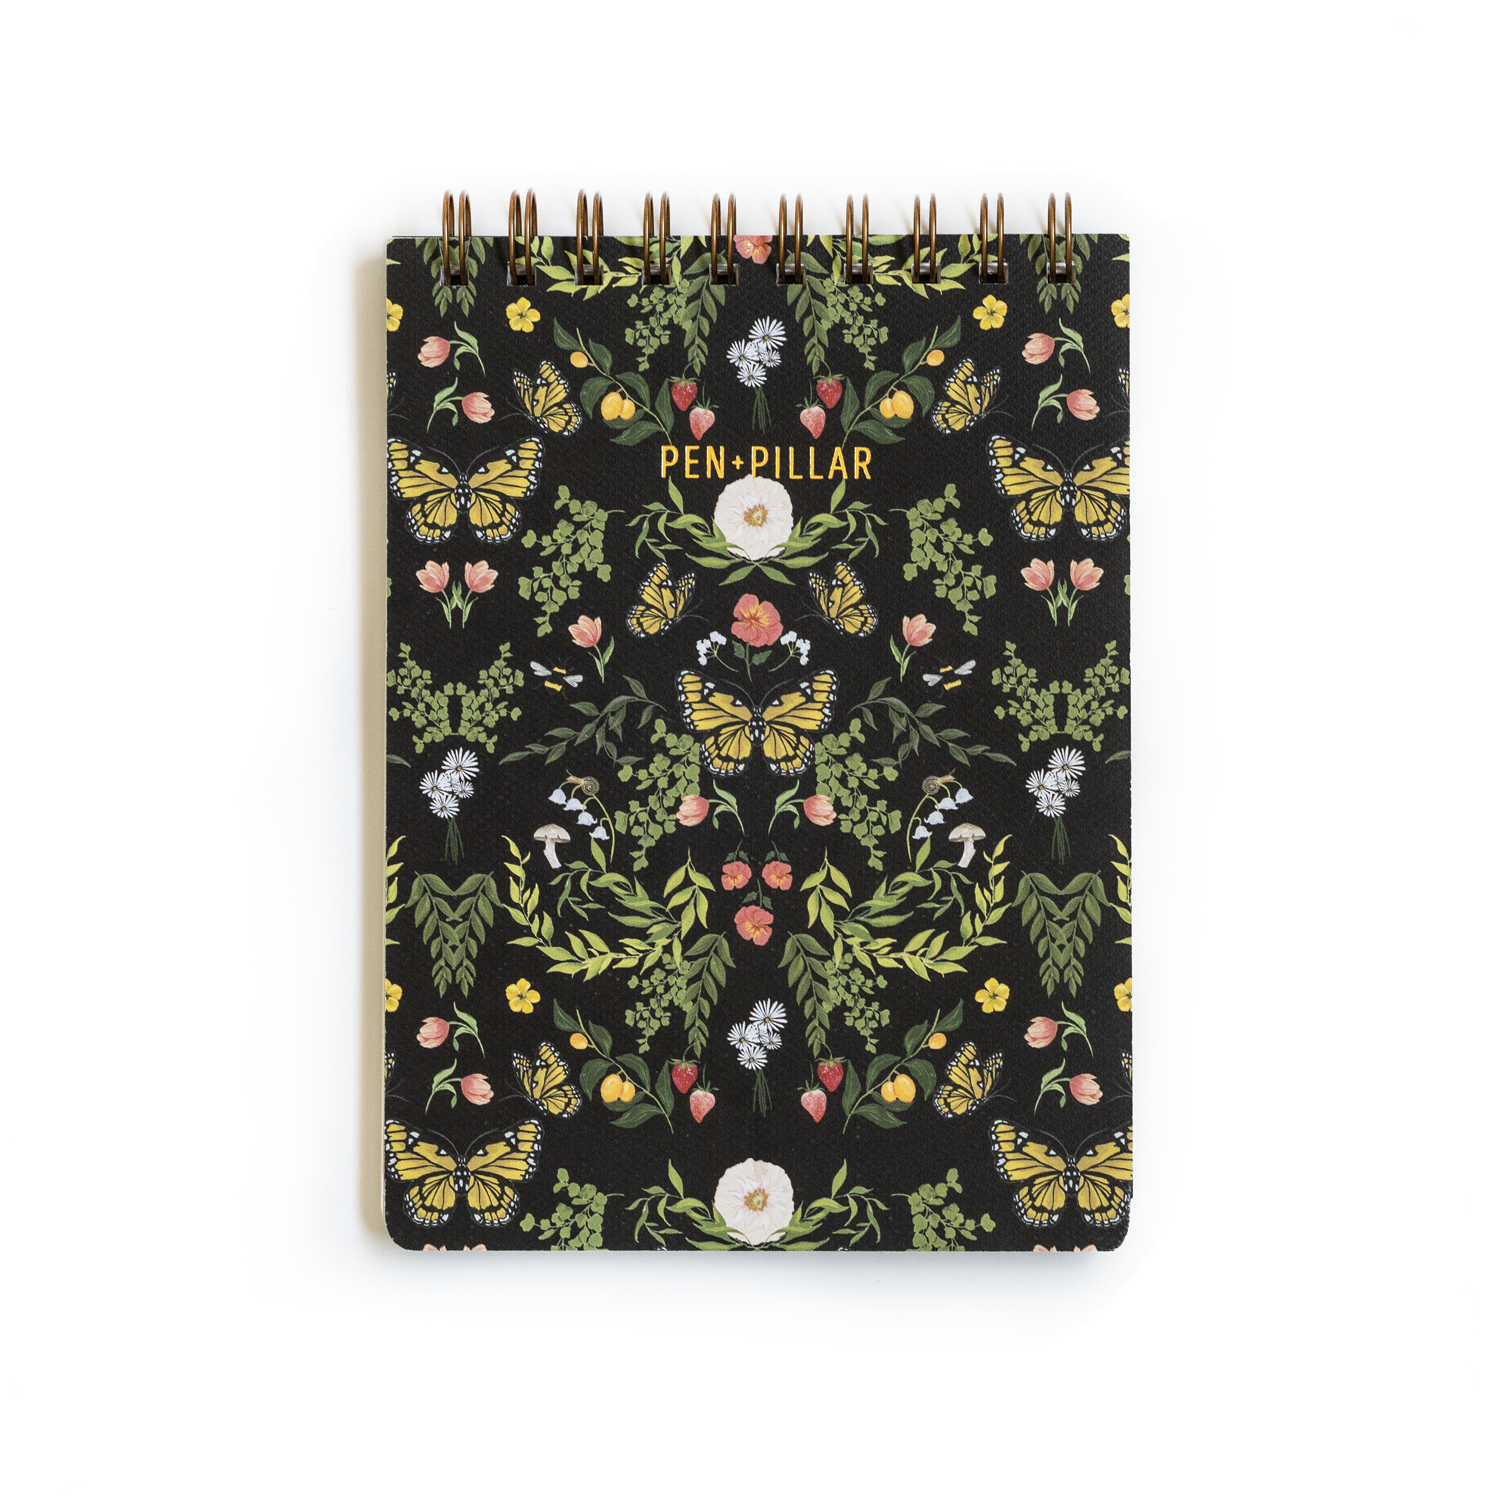 Monarch Top Spiral Notebook: Blank